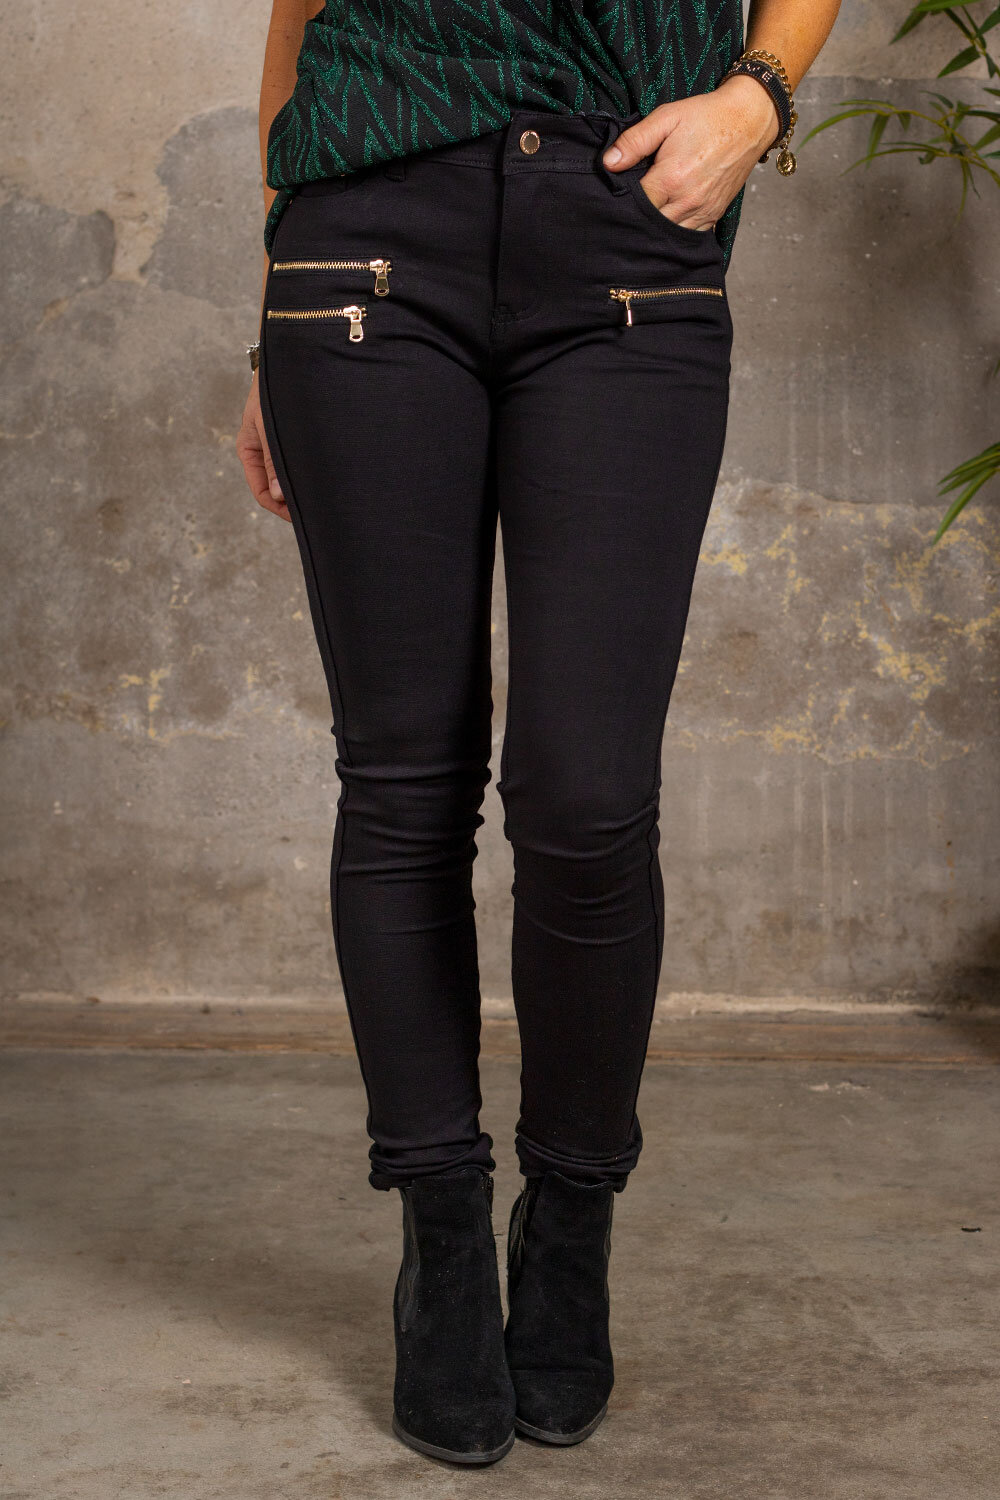 Pants A69 - Zippers - Black